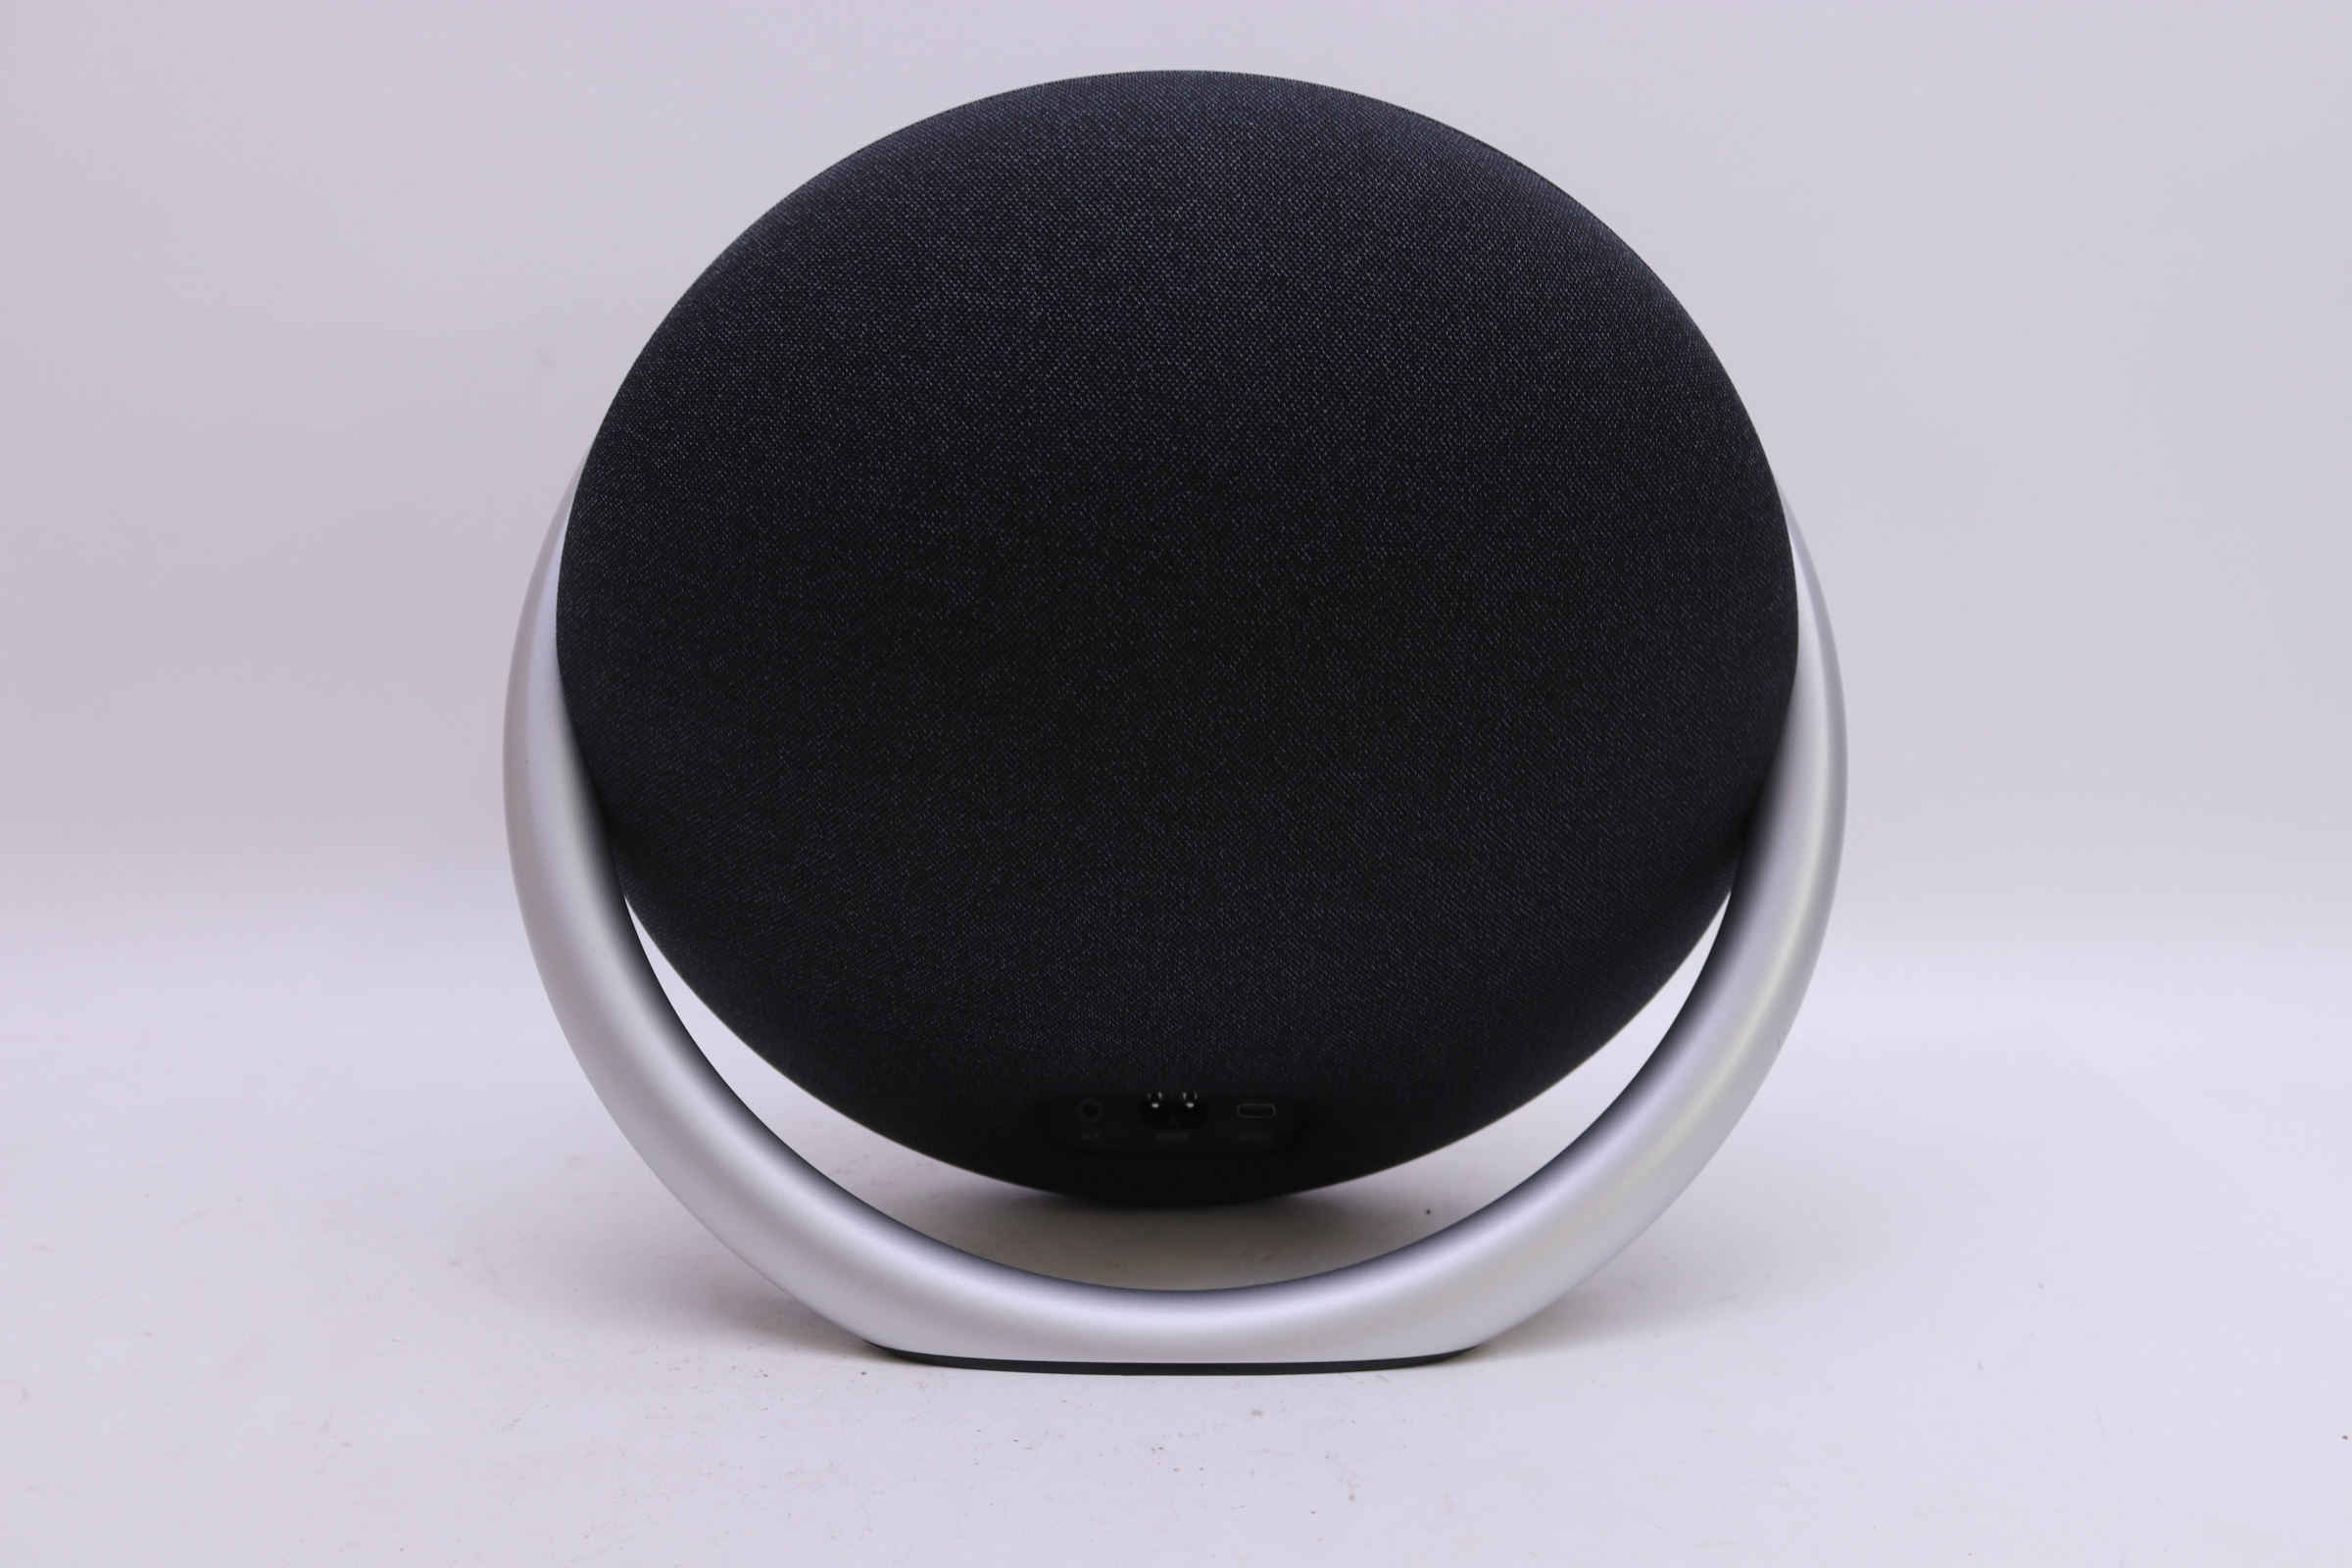 Harman Kardon Onyx Studio 8 Wireless Speaker (Black) HKOS8BLKAM